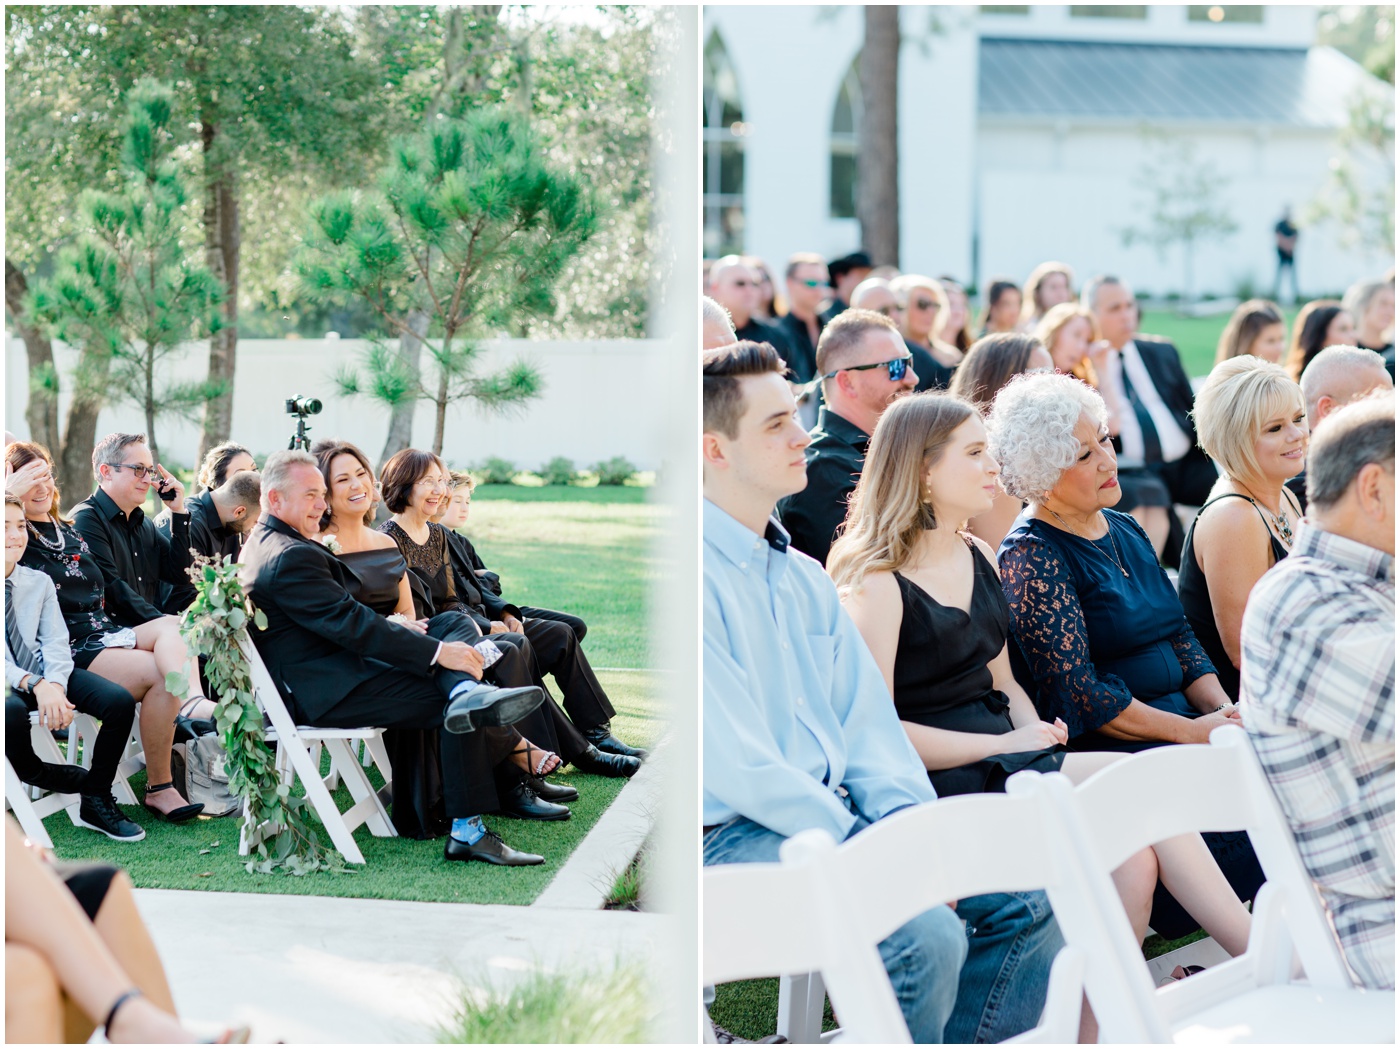 wedding photographer in Texas captures guests smiling wedding ceremony